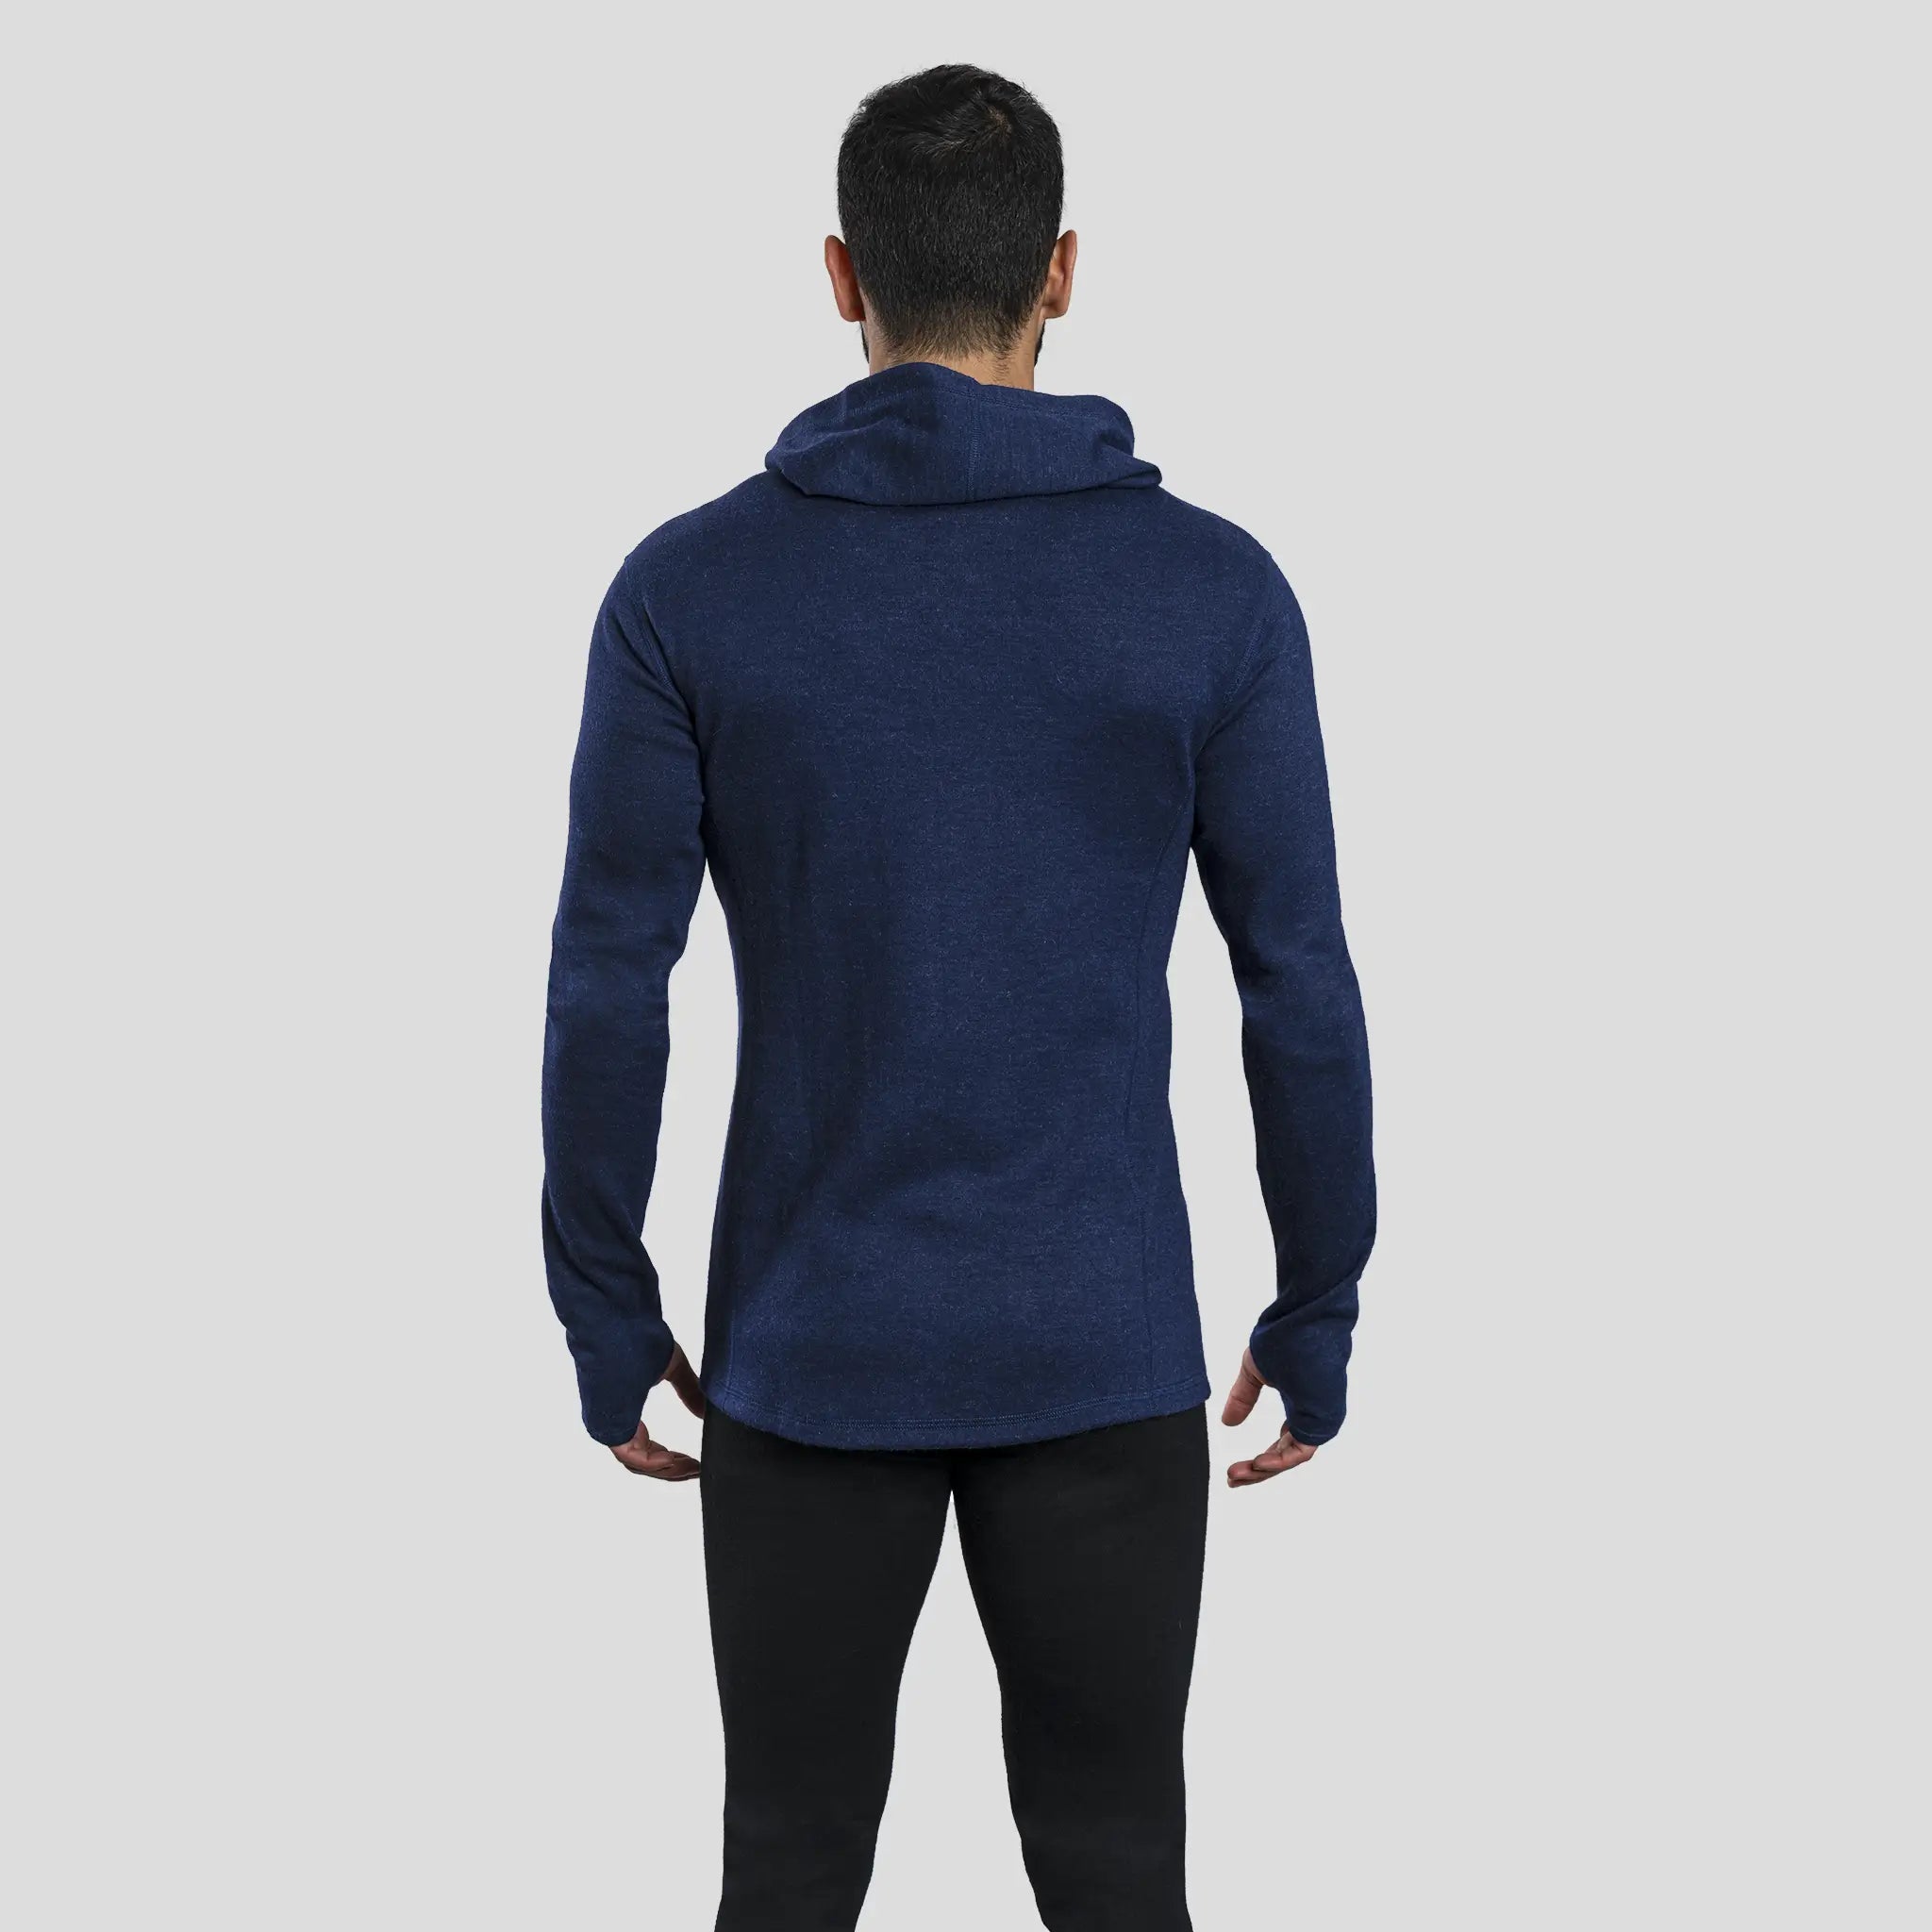 mens most comfortable hoodie jacket full zip color navy blue